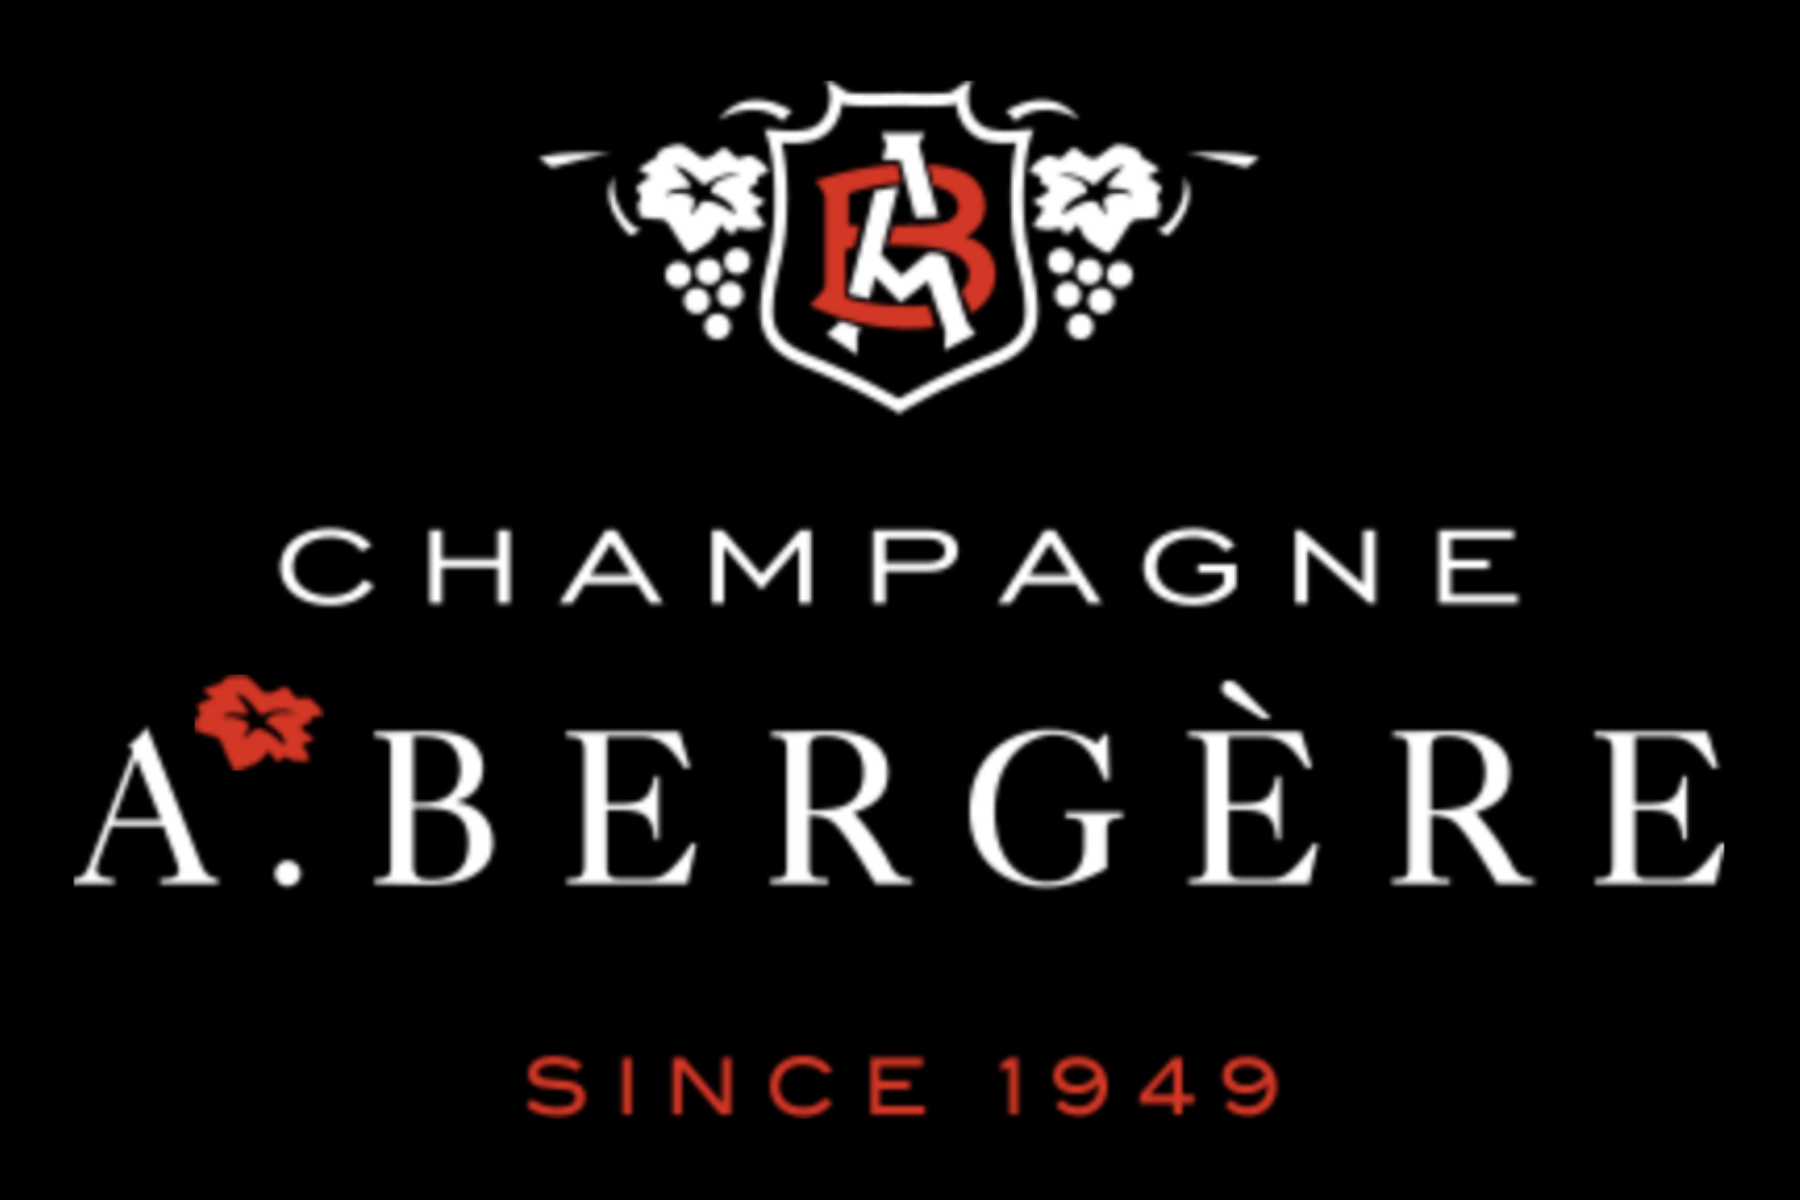 Champagne A. Bergere